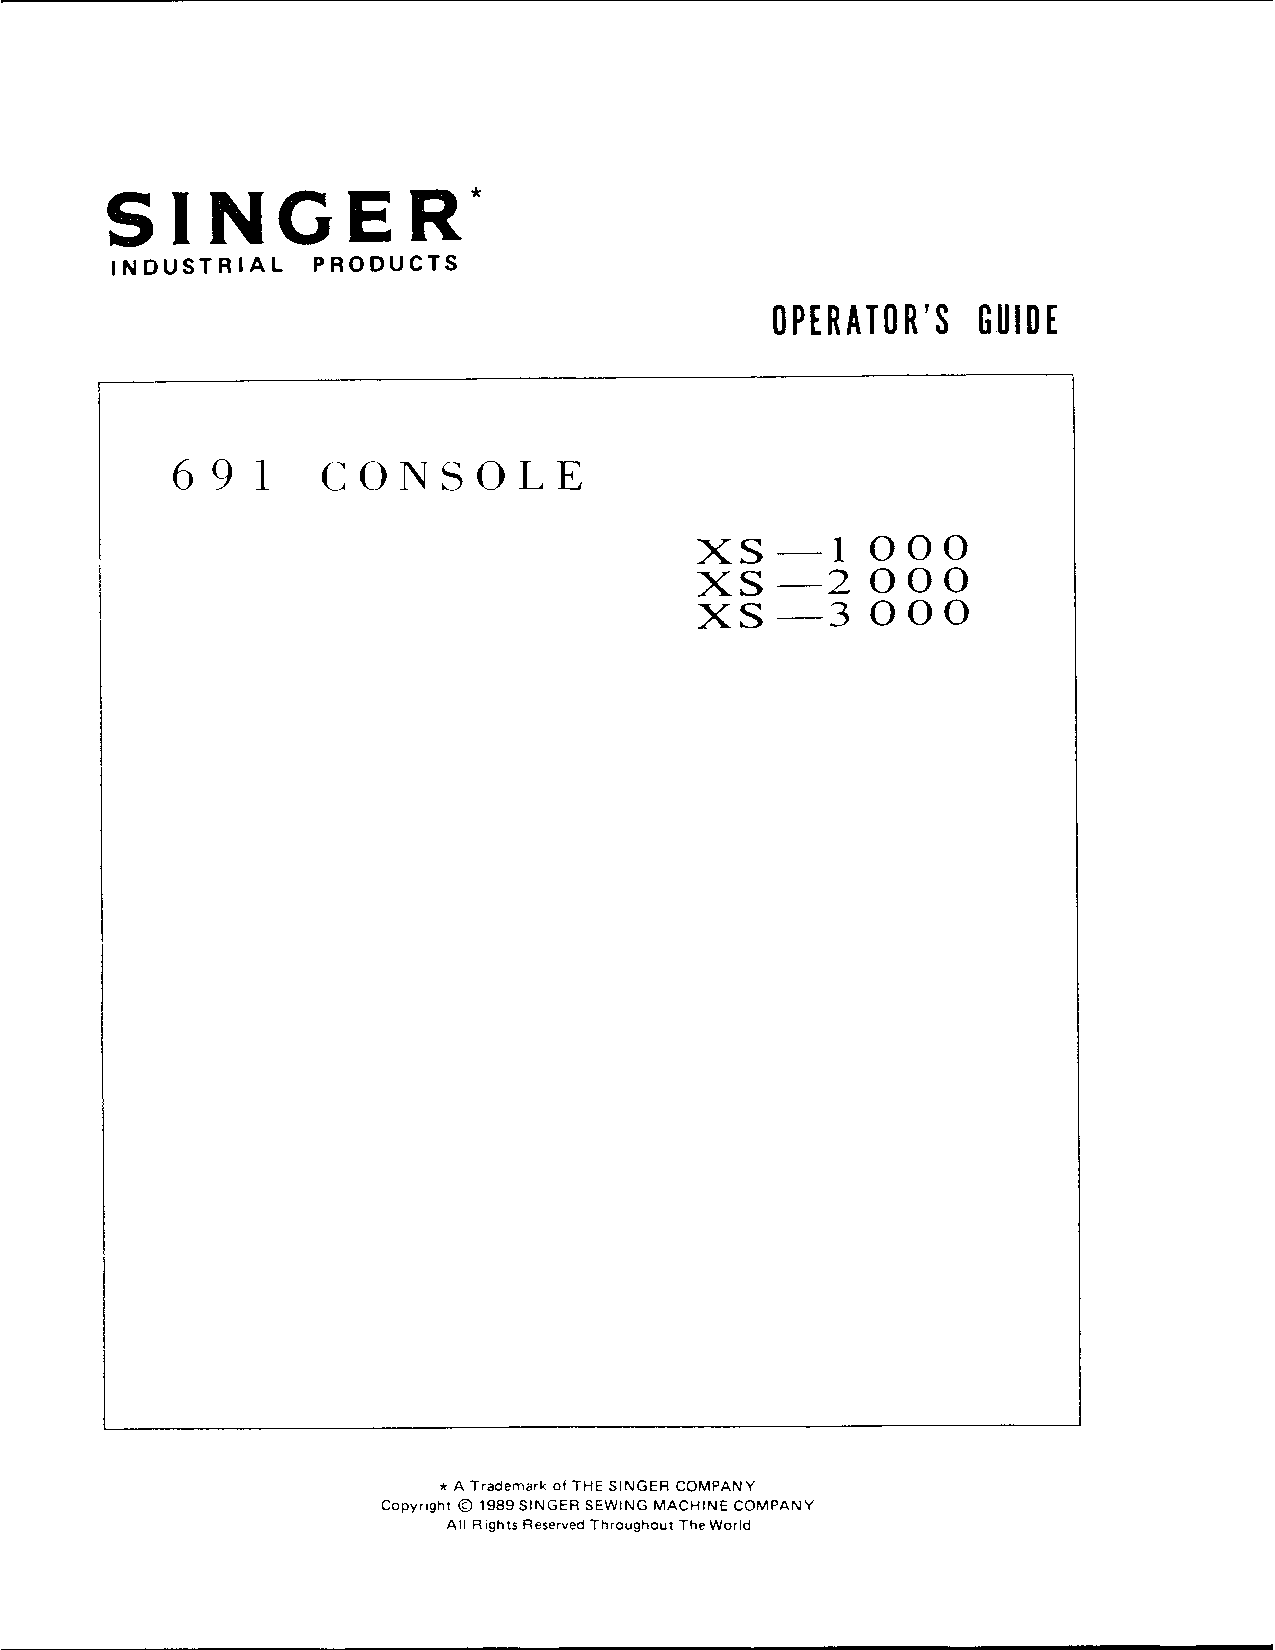 Singer 691CONSOLE, XS1000, XS2000, XS3000 User Manual